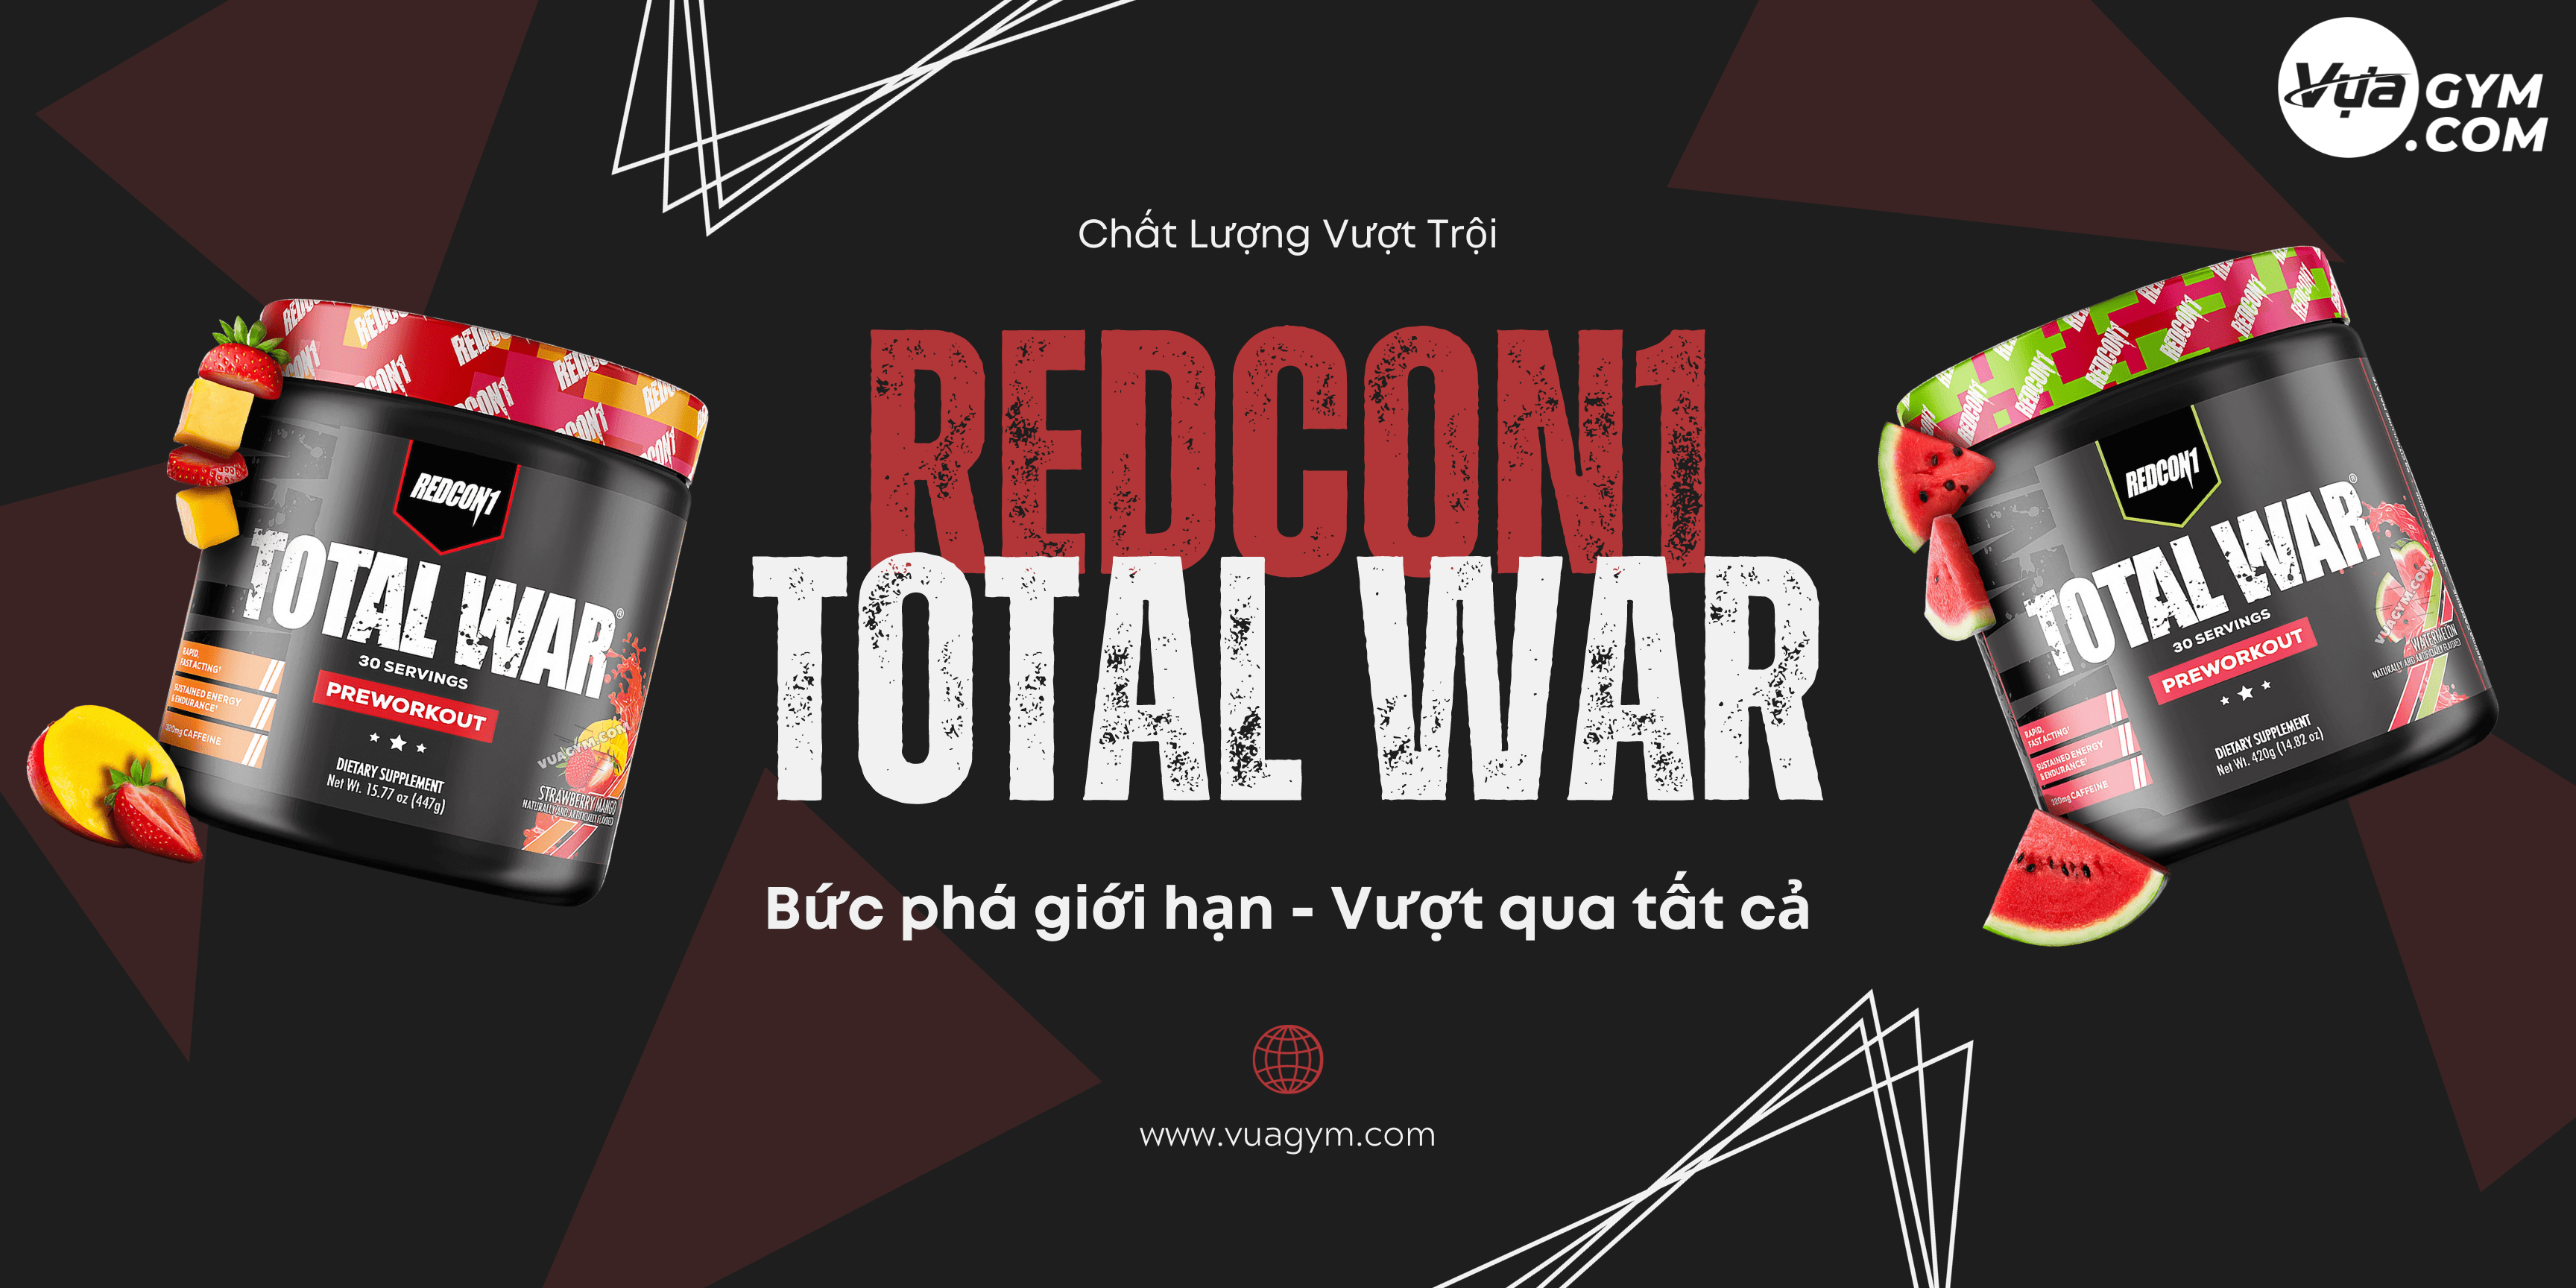 Redcon1 - Total War (30 lần dùng) - redcon1 total war 30sv motavuagym 1